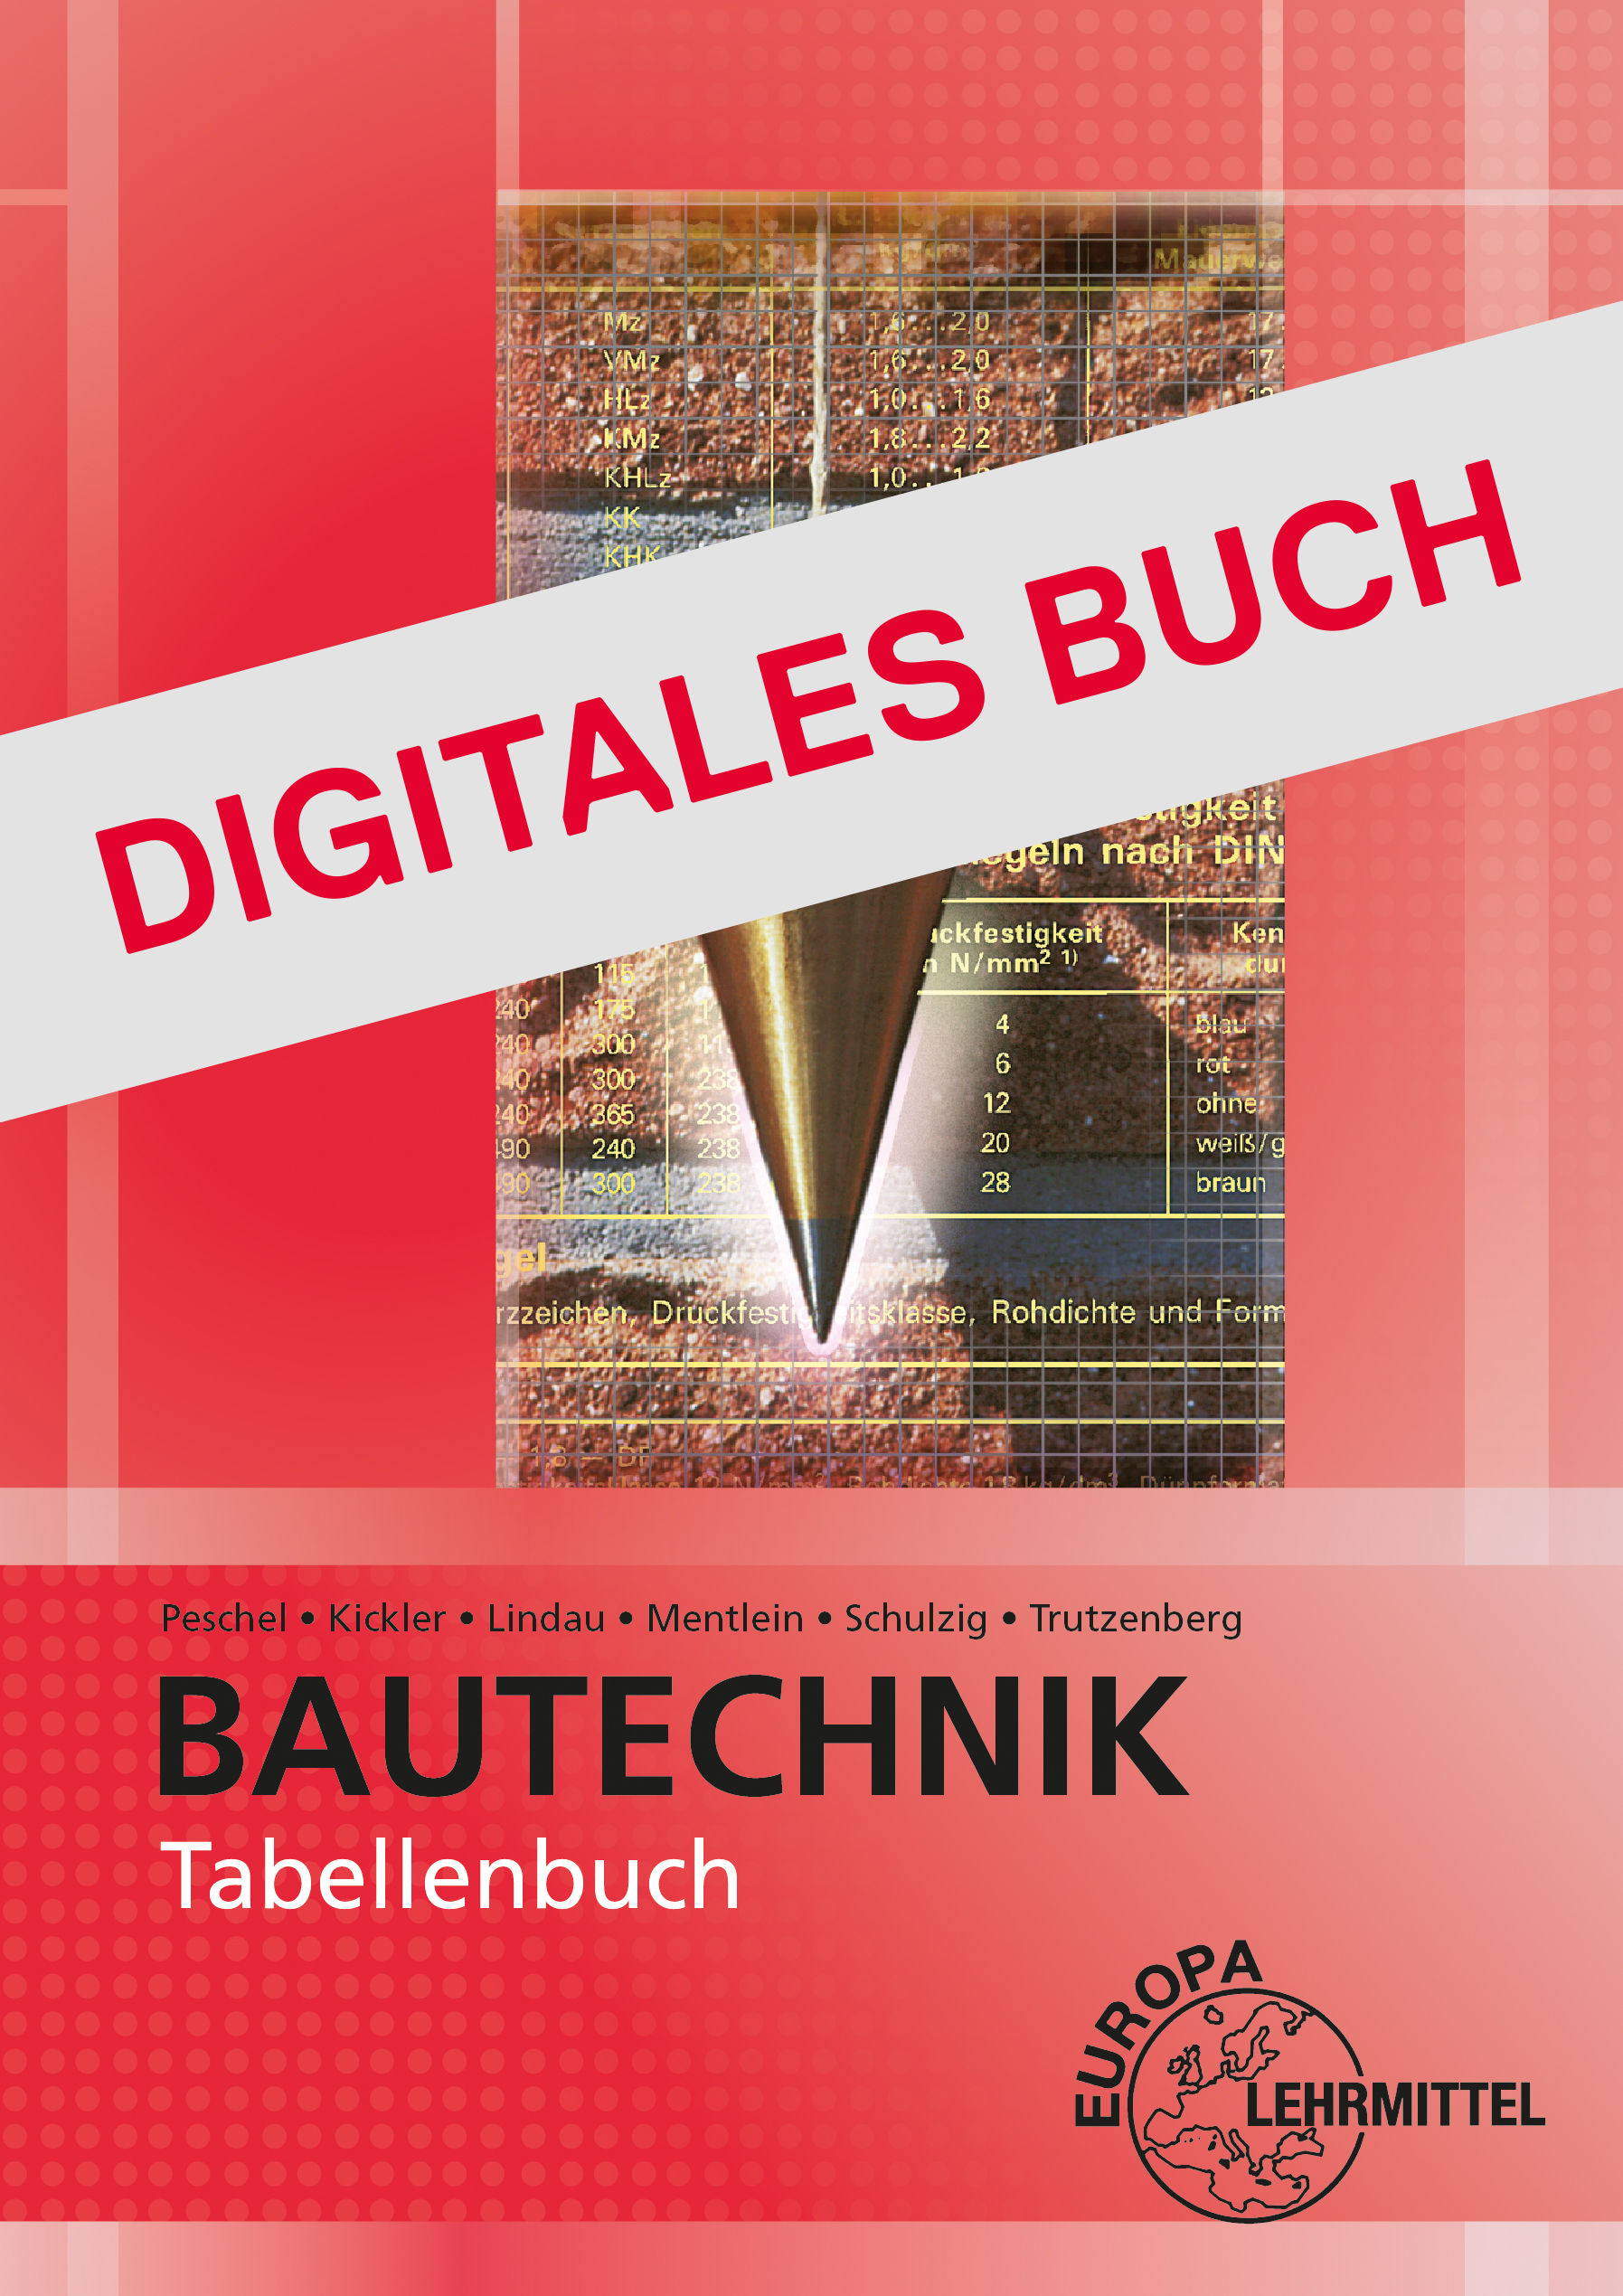 Tabellenbuch Bautechnik - Digitales Buch